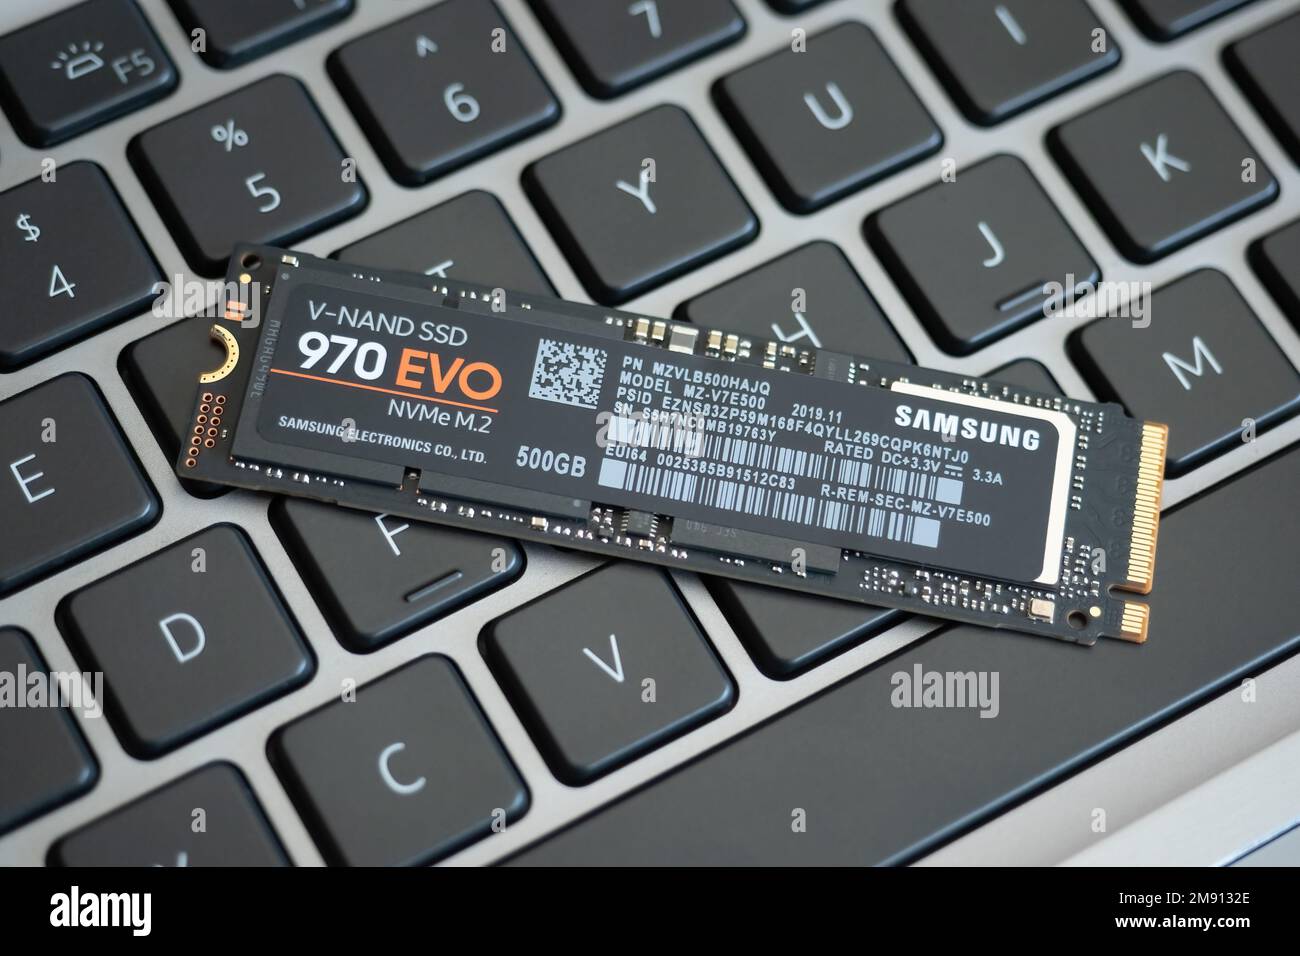 Samsung 970 EVO Plus - 1 To - Disque SSD Samsung sur